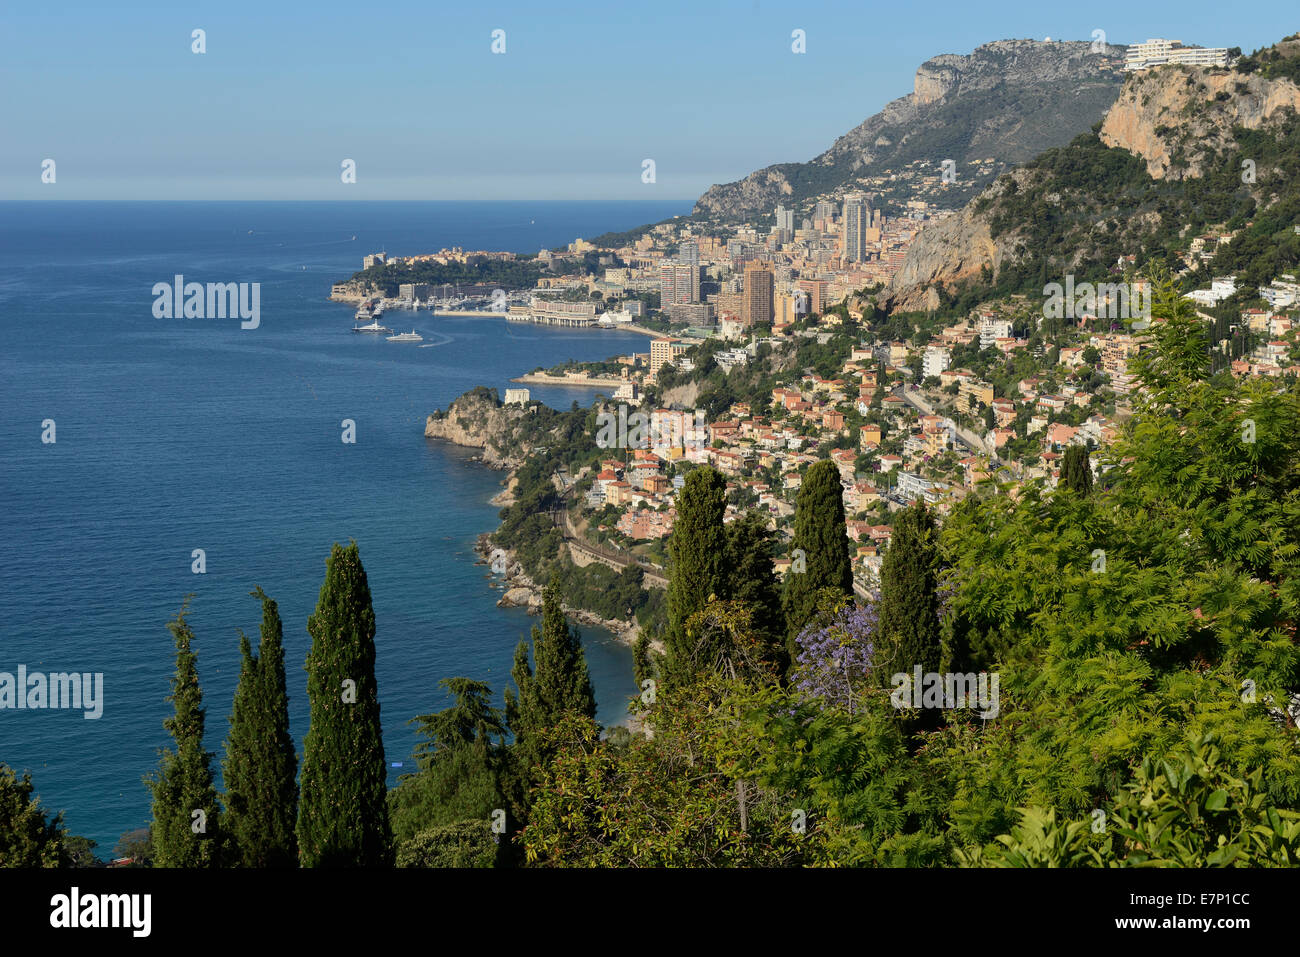 Europe, France, Cote d'Azur, Monaco, Monte Carlo, Riviera, Mediterranean, coastal, coast, city Stock Photo